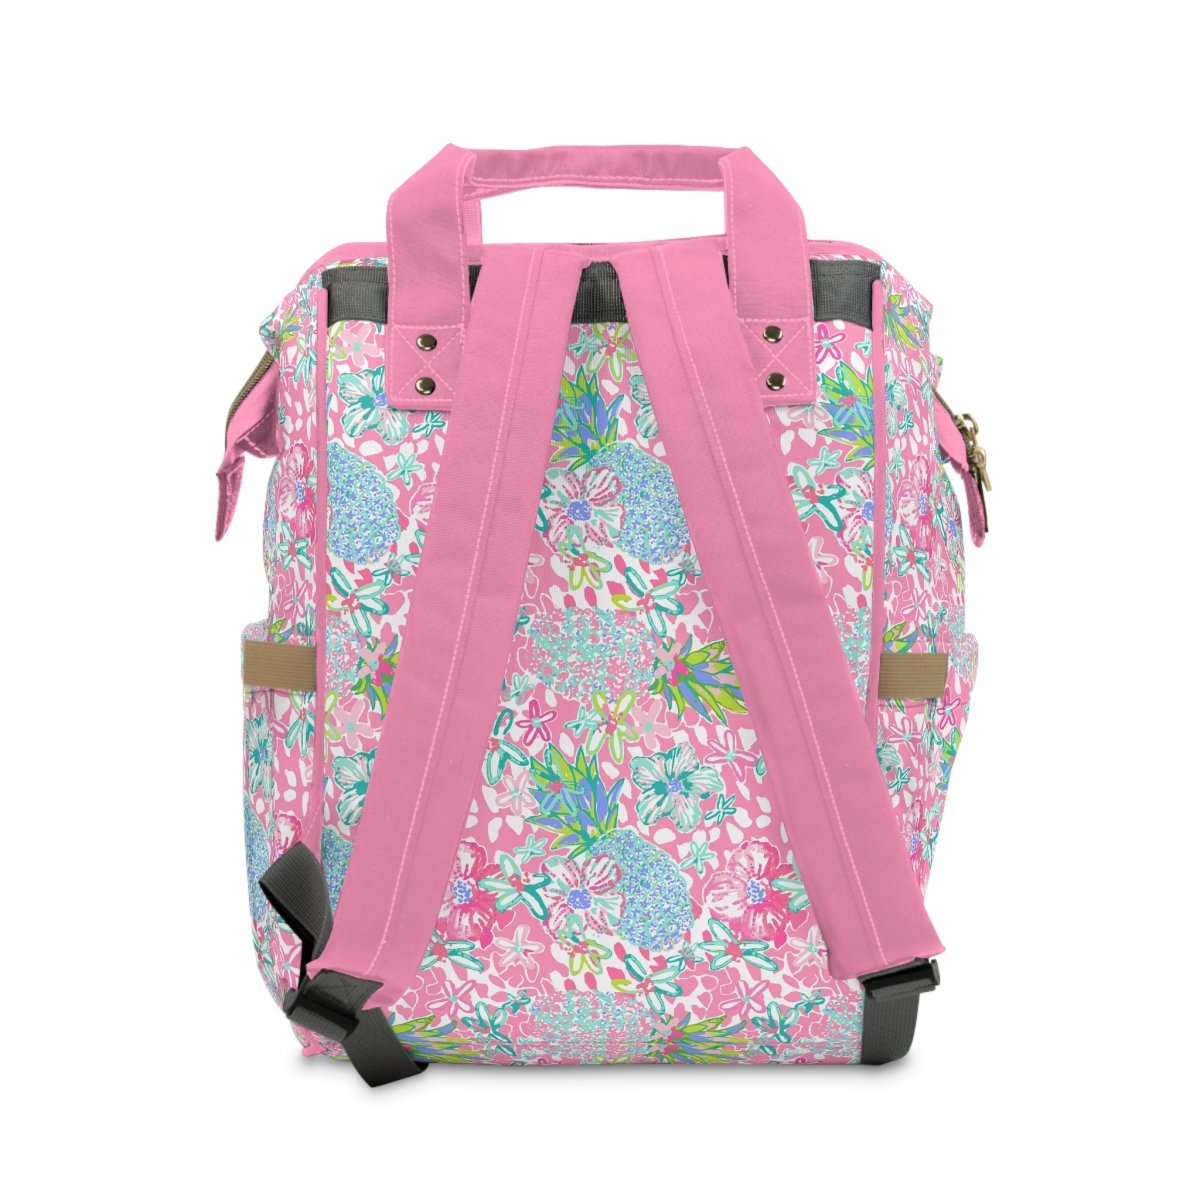 Preppy Summer Personalized Backpack Diaper Bag - gender_girl, Preppy Summer, text